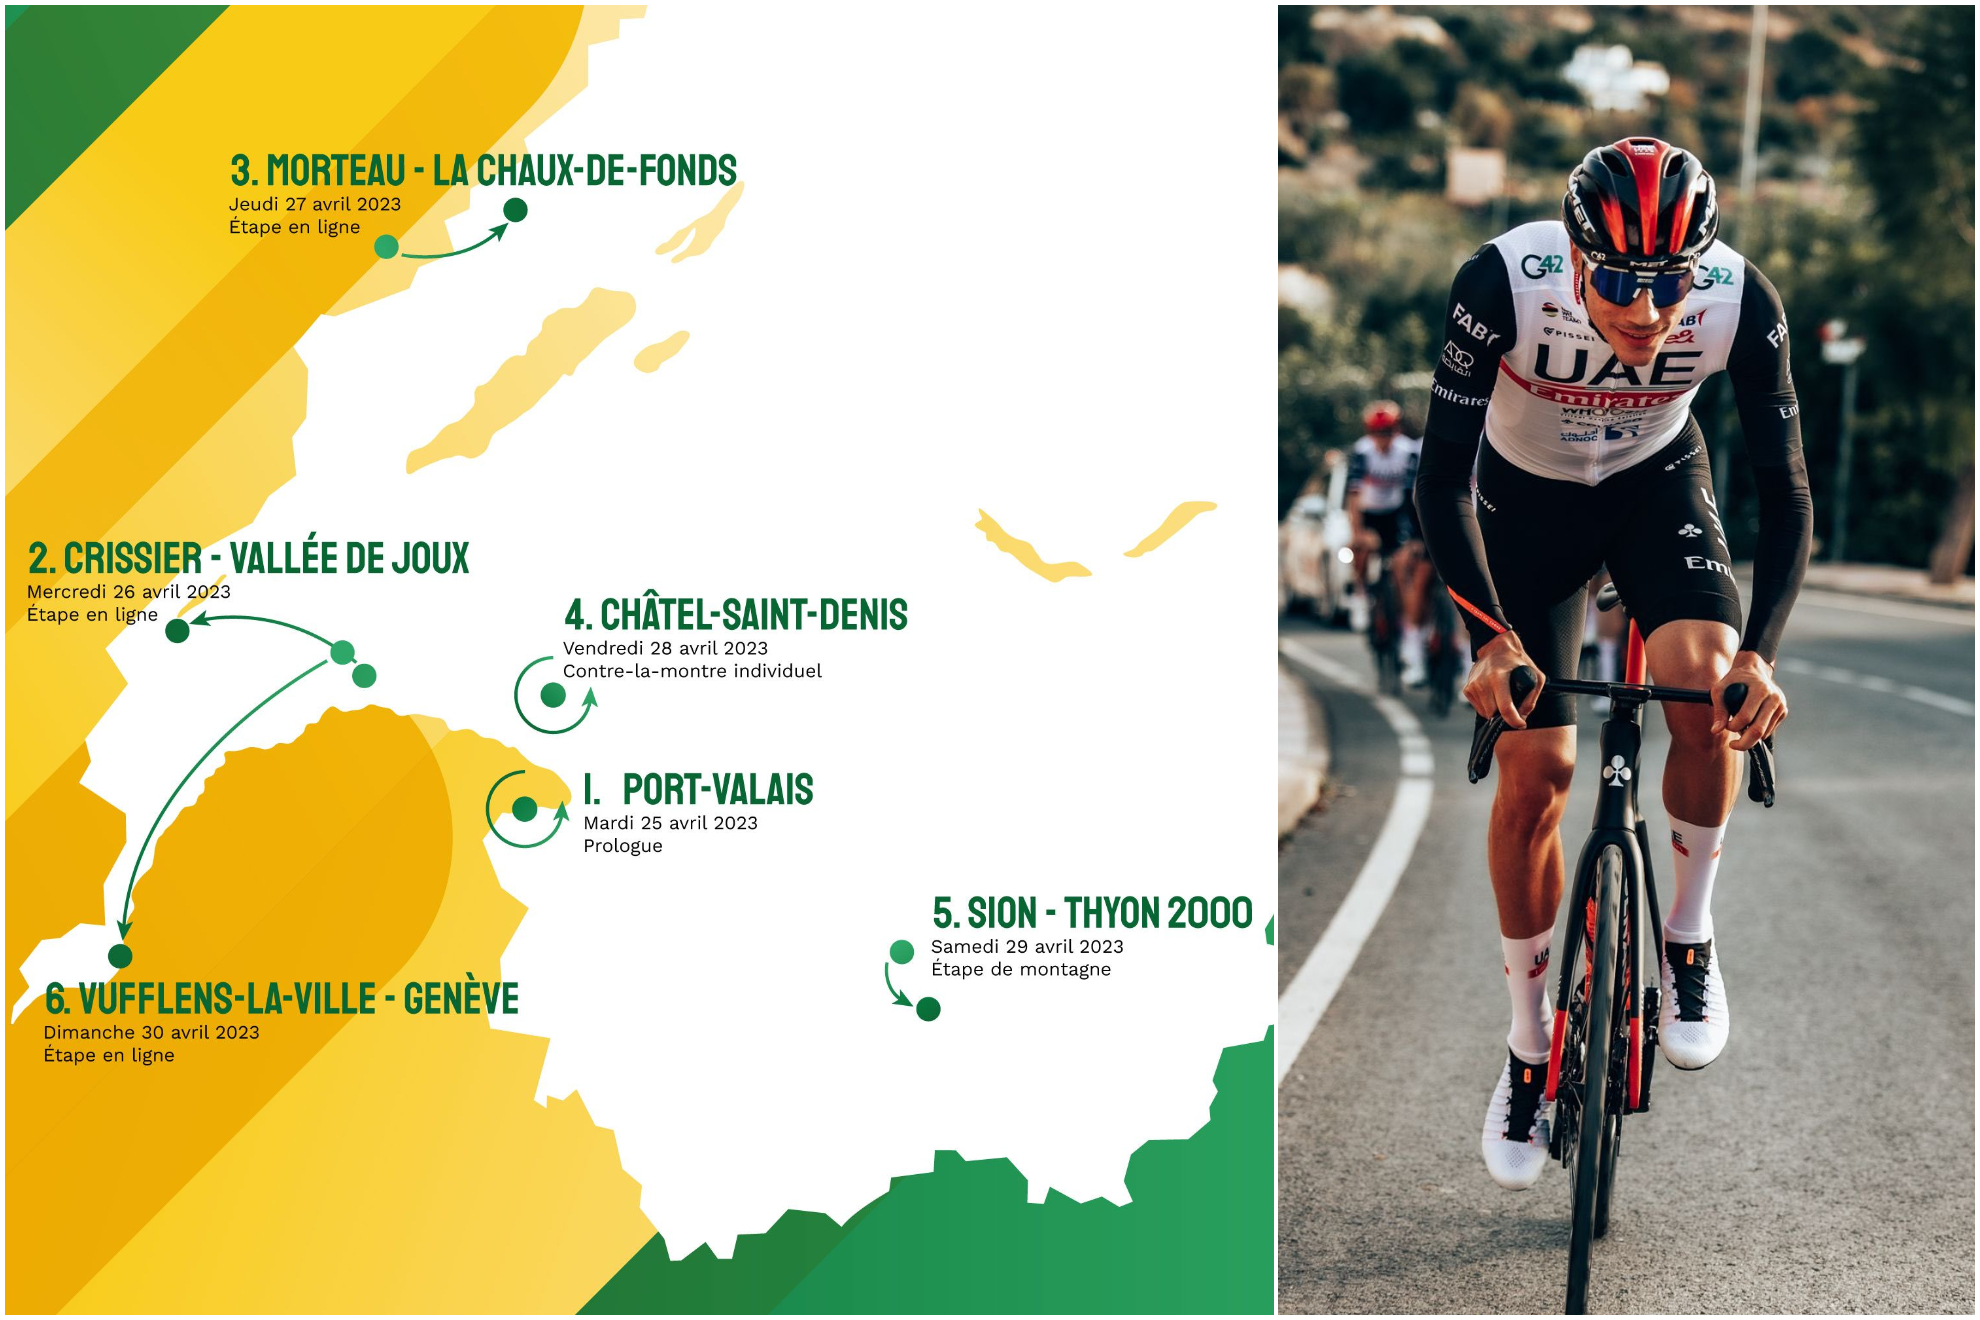 Tour de Romanda 2023: etapas, perfiles, recorrido, equipos y favoritos